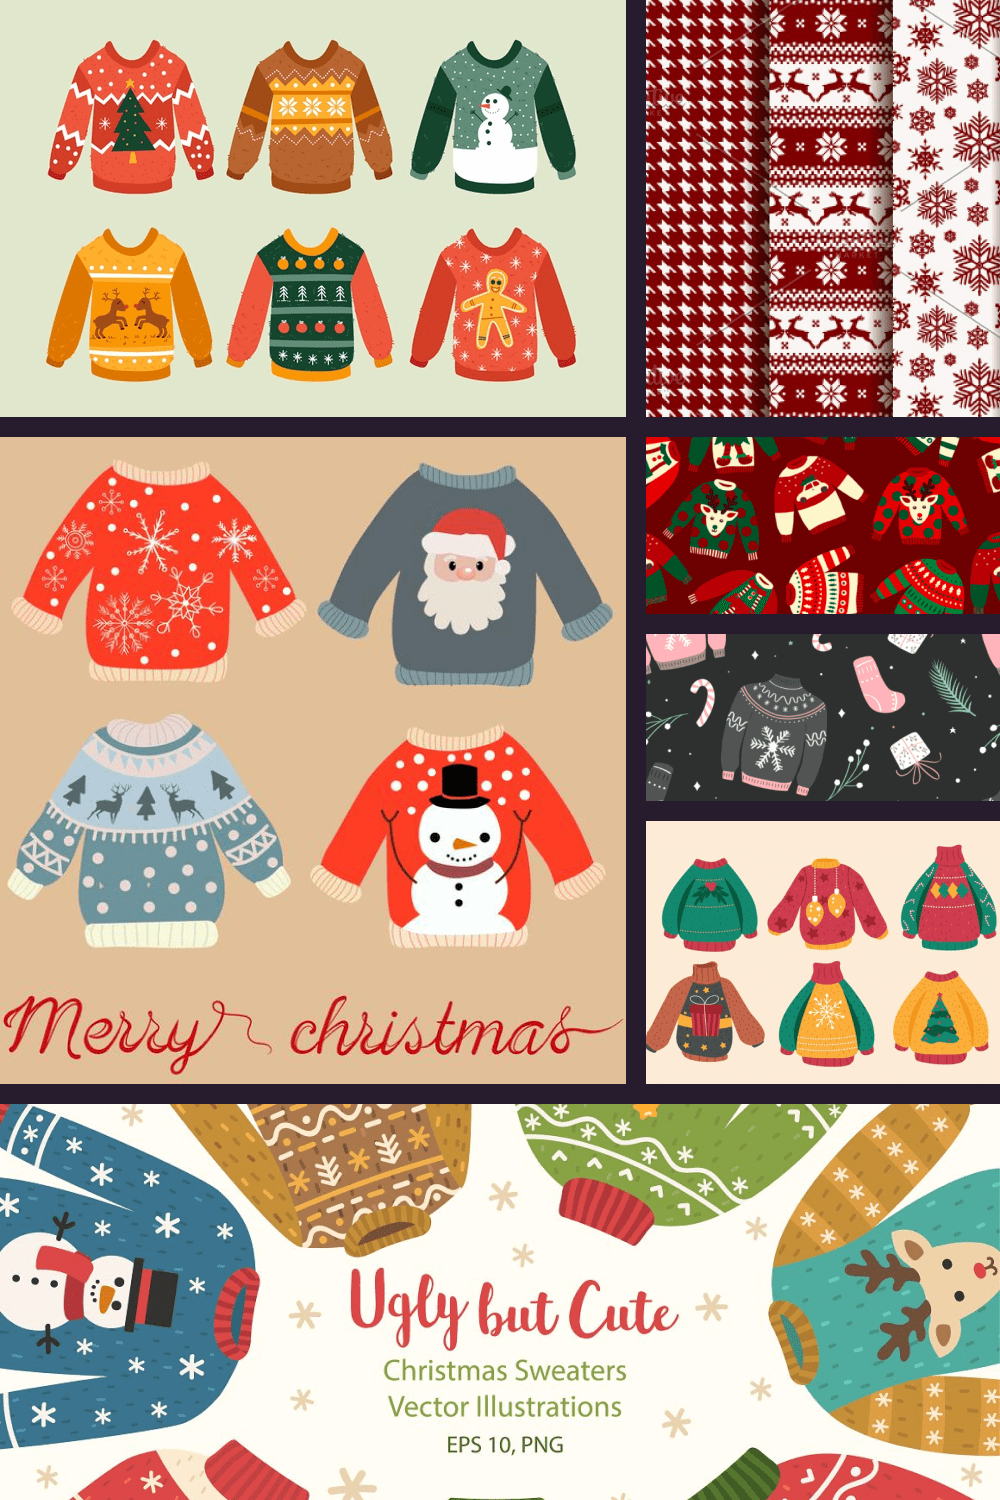 Christmas Sweater Patterns Pinterest.